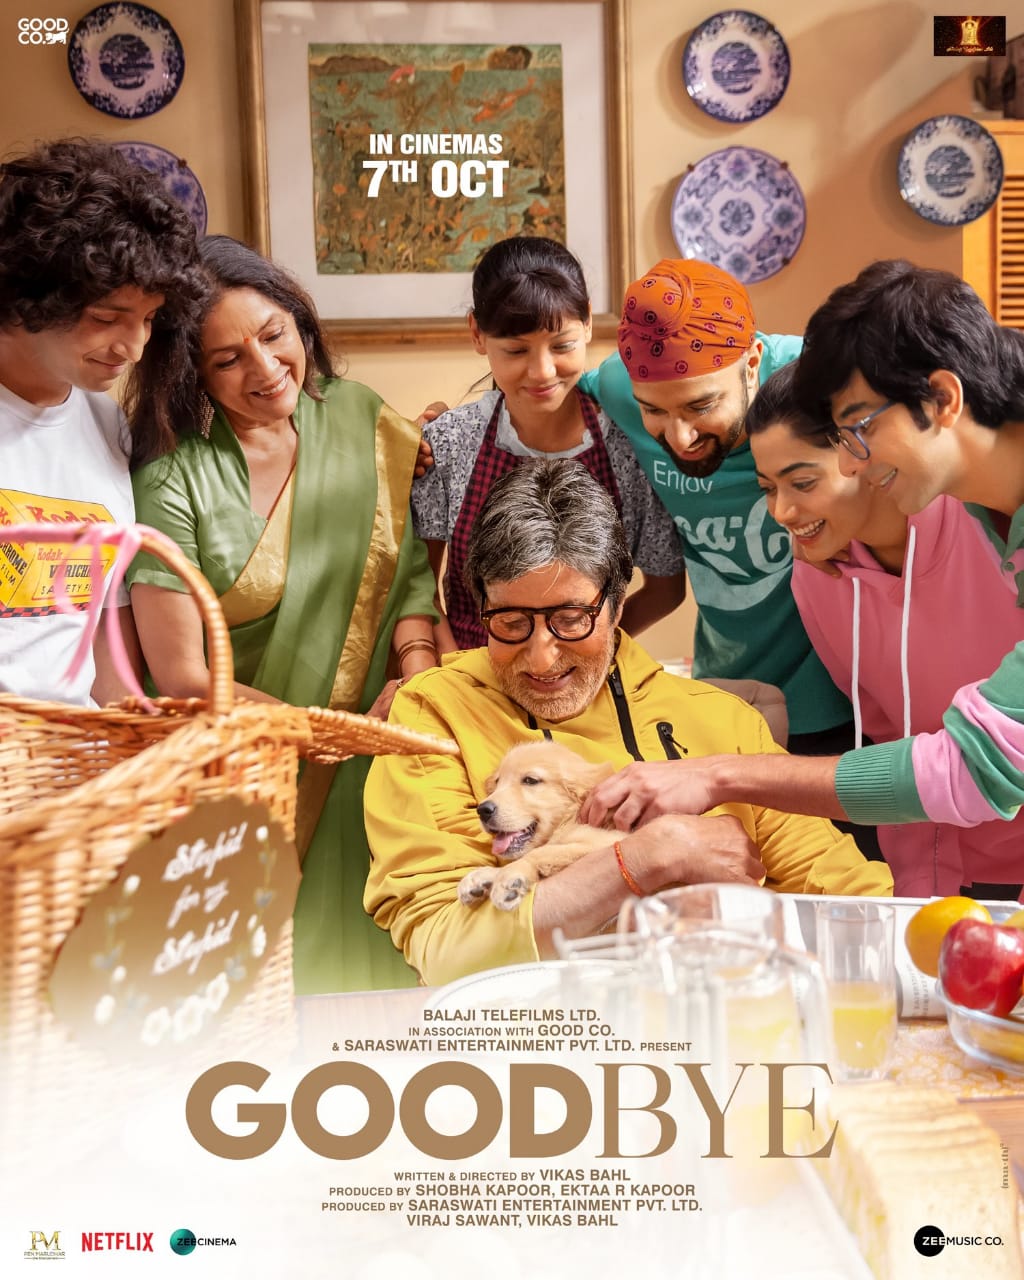 Rashmika Mandanna Amitabh Bachchan Good Bye Movie Release Date